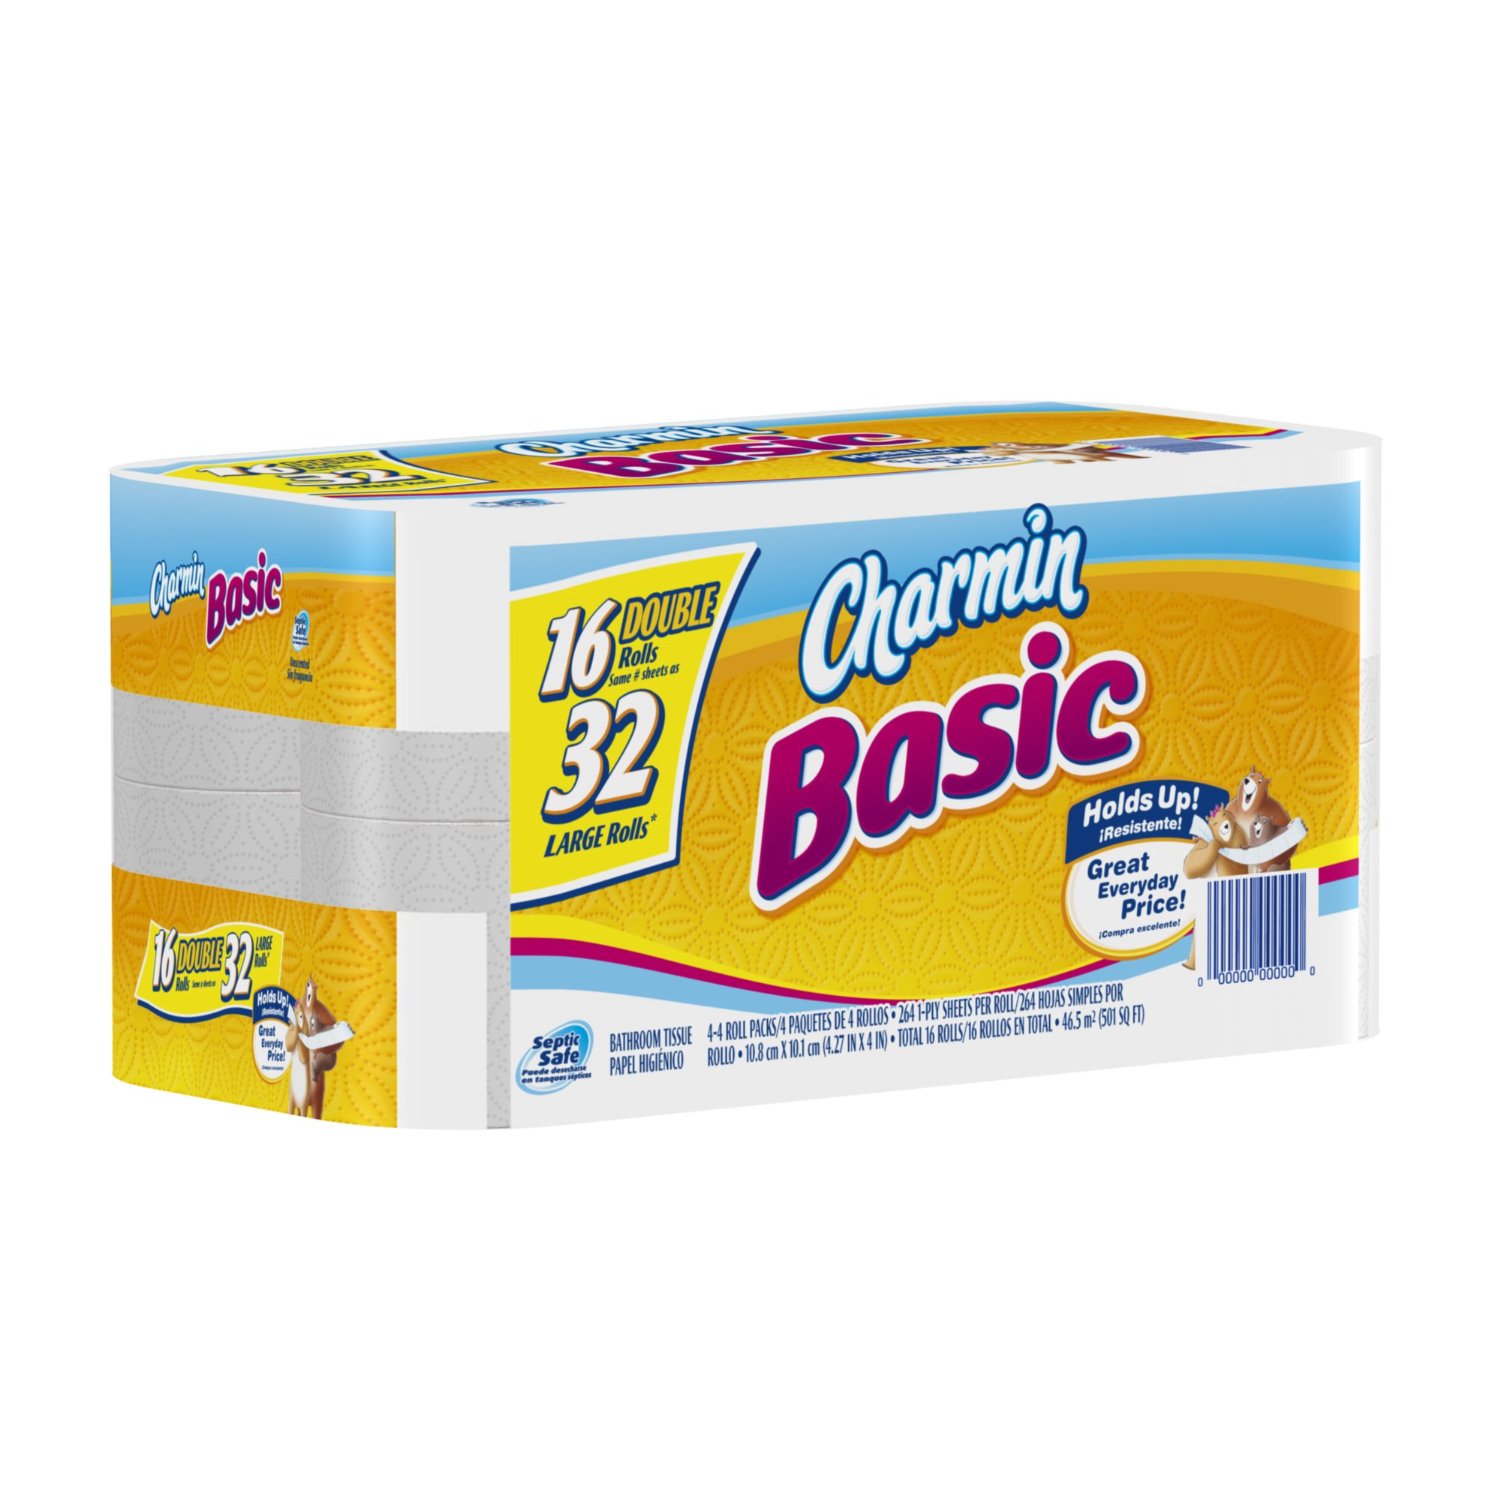 Charmin Basic 双层卫生纸 32卷 $10.18免运费